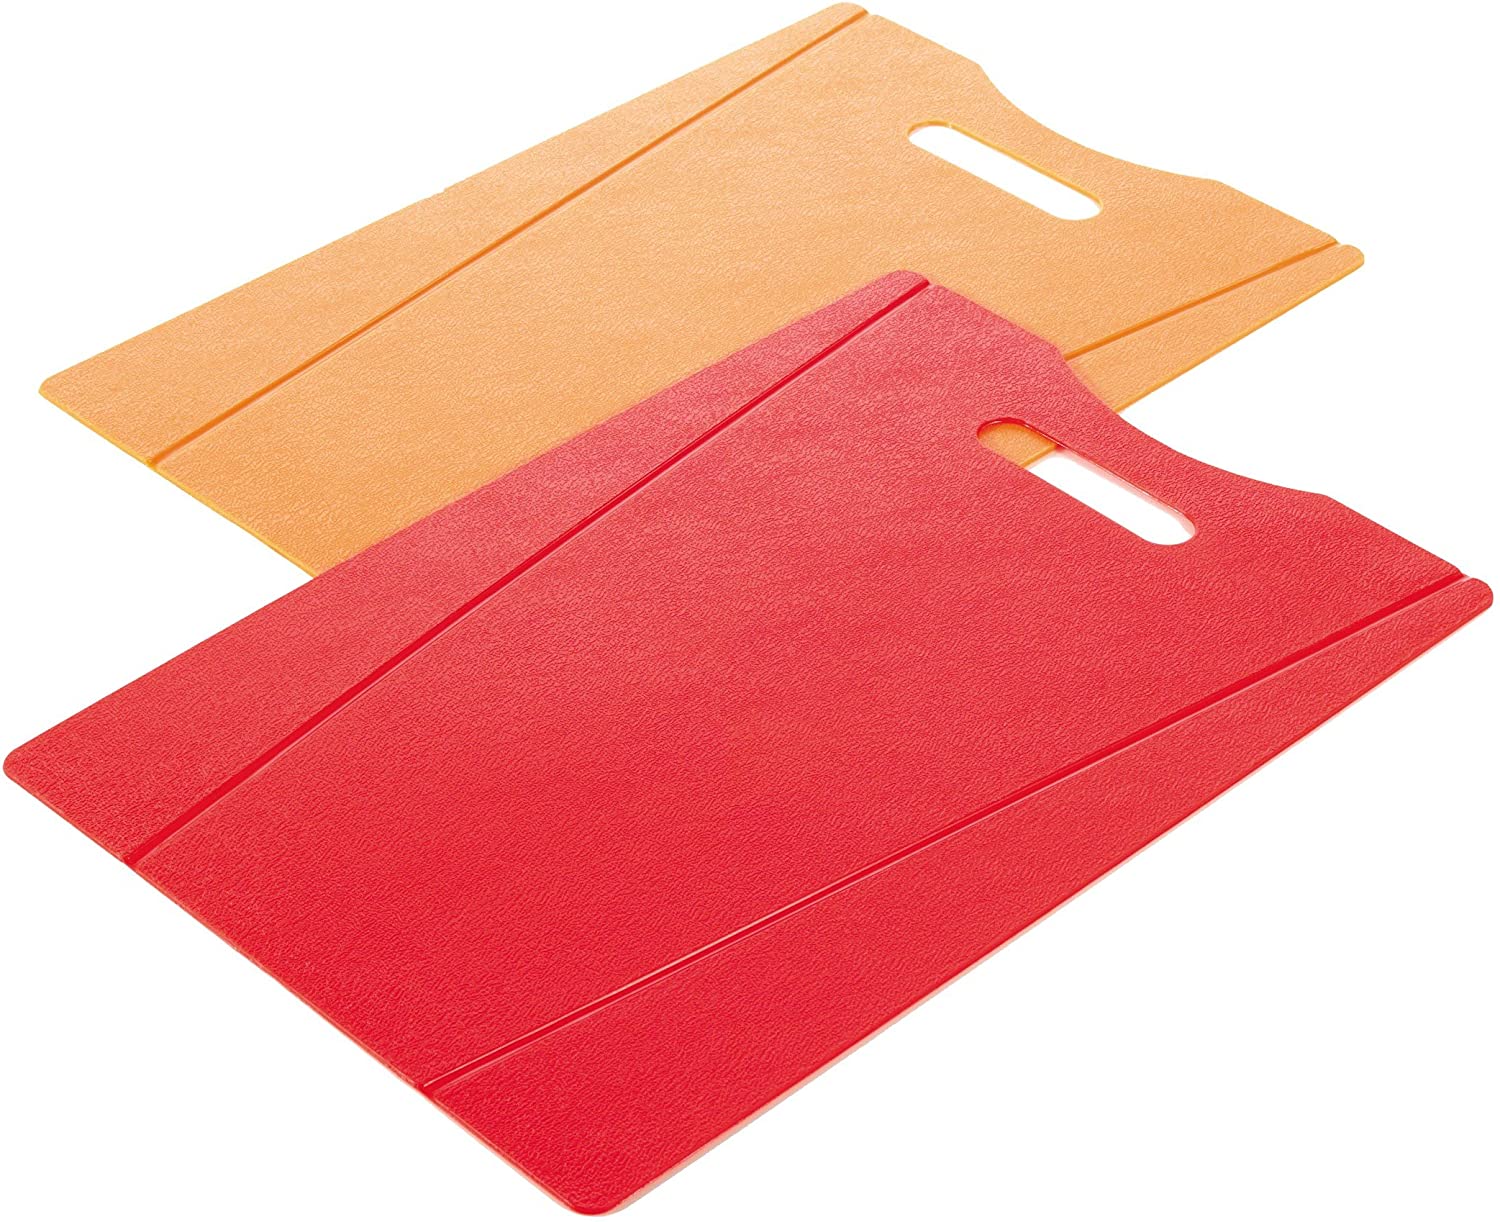 Kuhn Rikon Chopping Boards (Orange and Red)